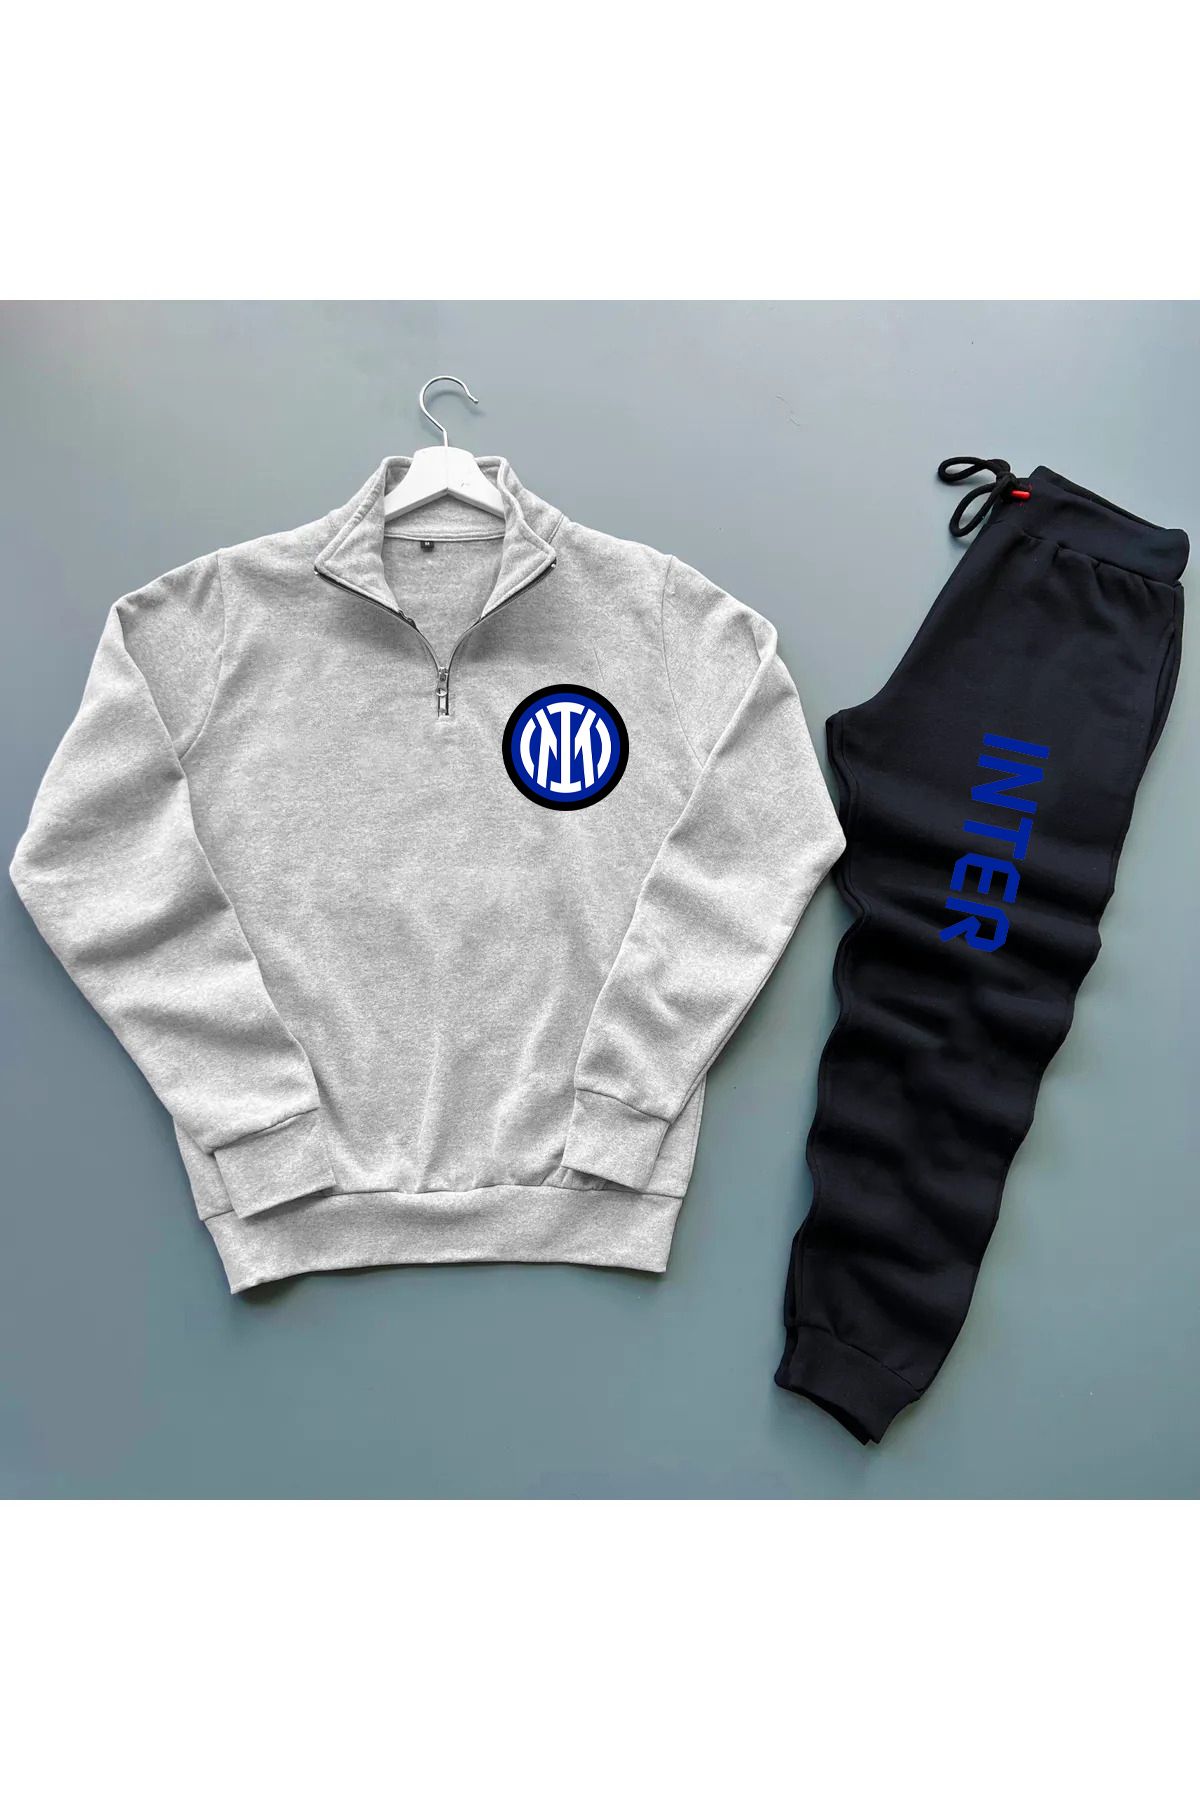 Pisa Art Inter Milan Eşofman Takımı Sweatshirt + sweatpants